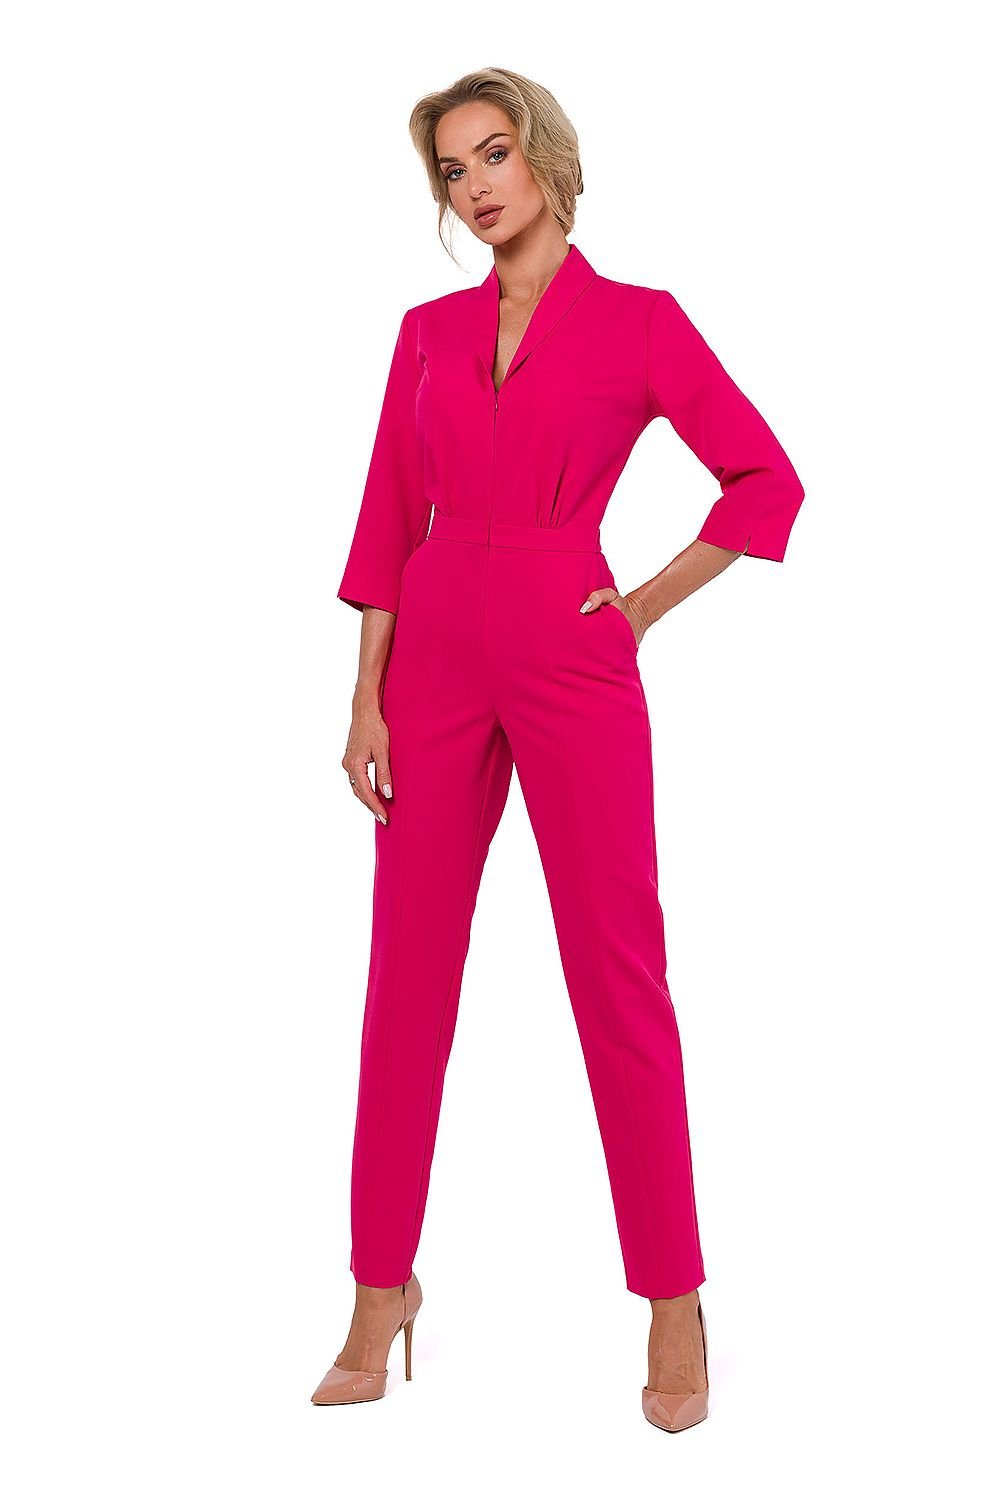 TEEK - Pocketed Sleek V-Neck Supervise Jumpsuit JUMPSUIT TEEK MH pink L 